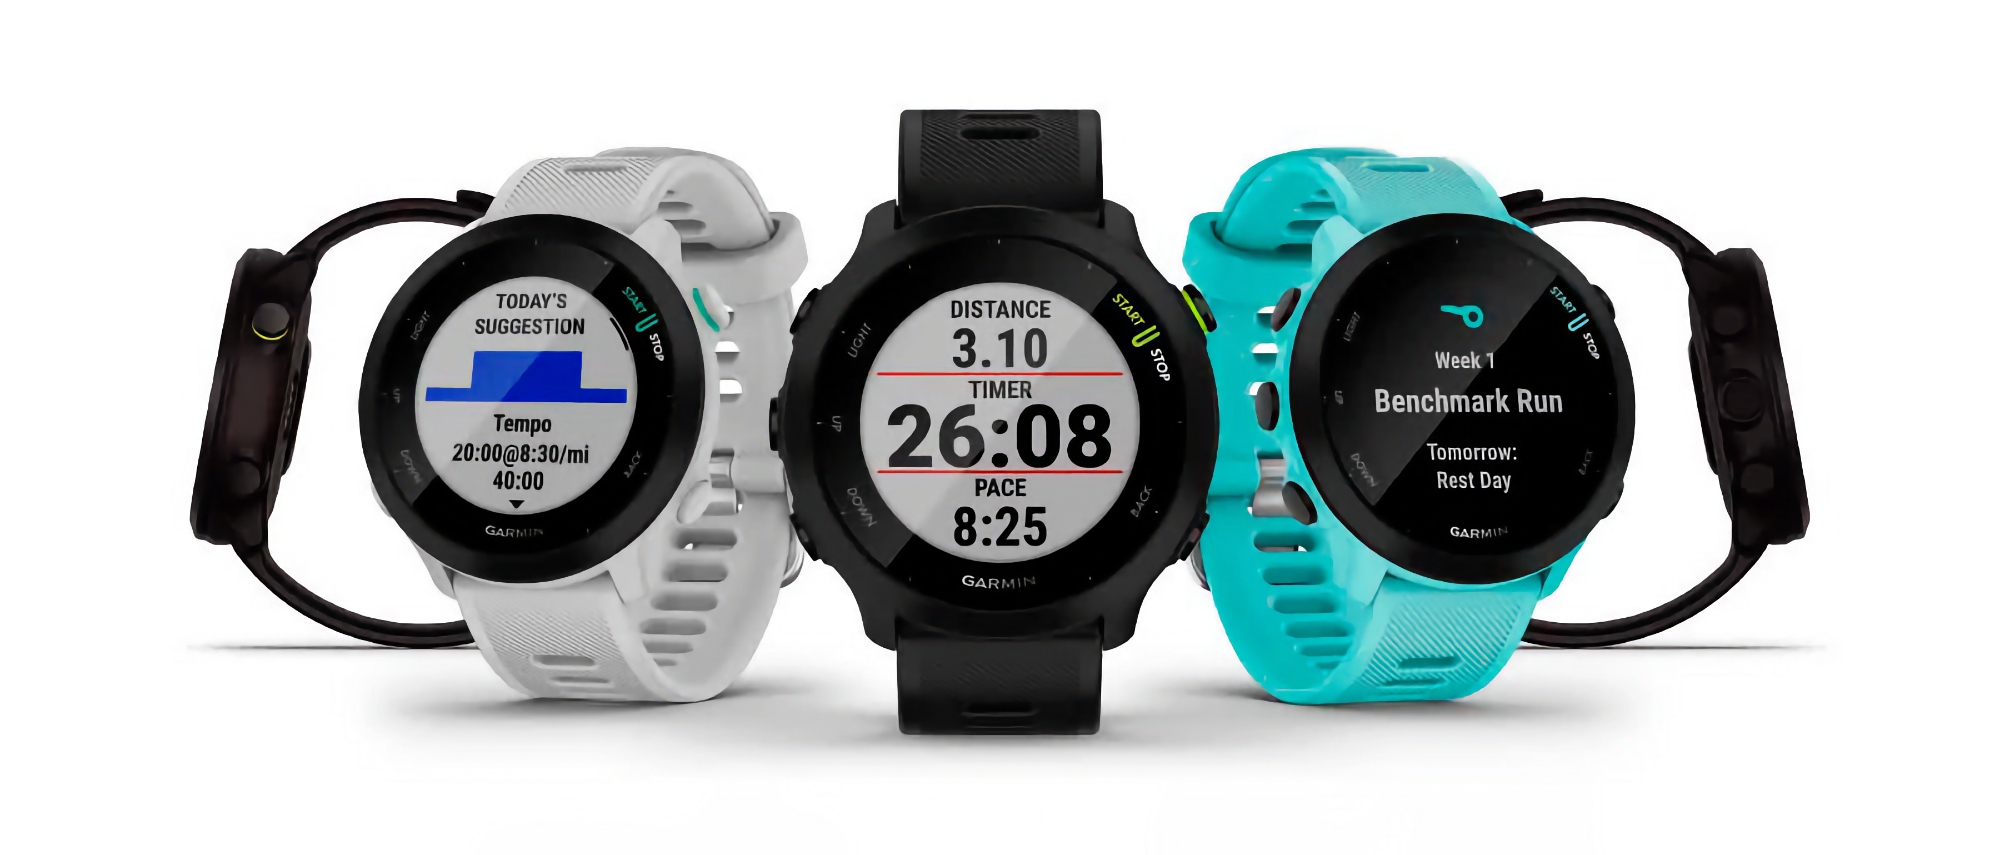 Forerunner 55 successor: Garmin Forerunner 165 sports smart watch specifications have appeared online